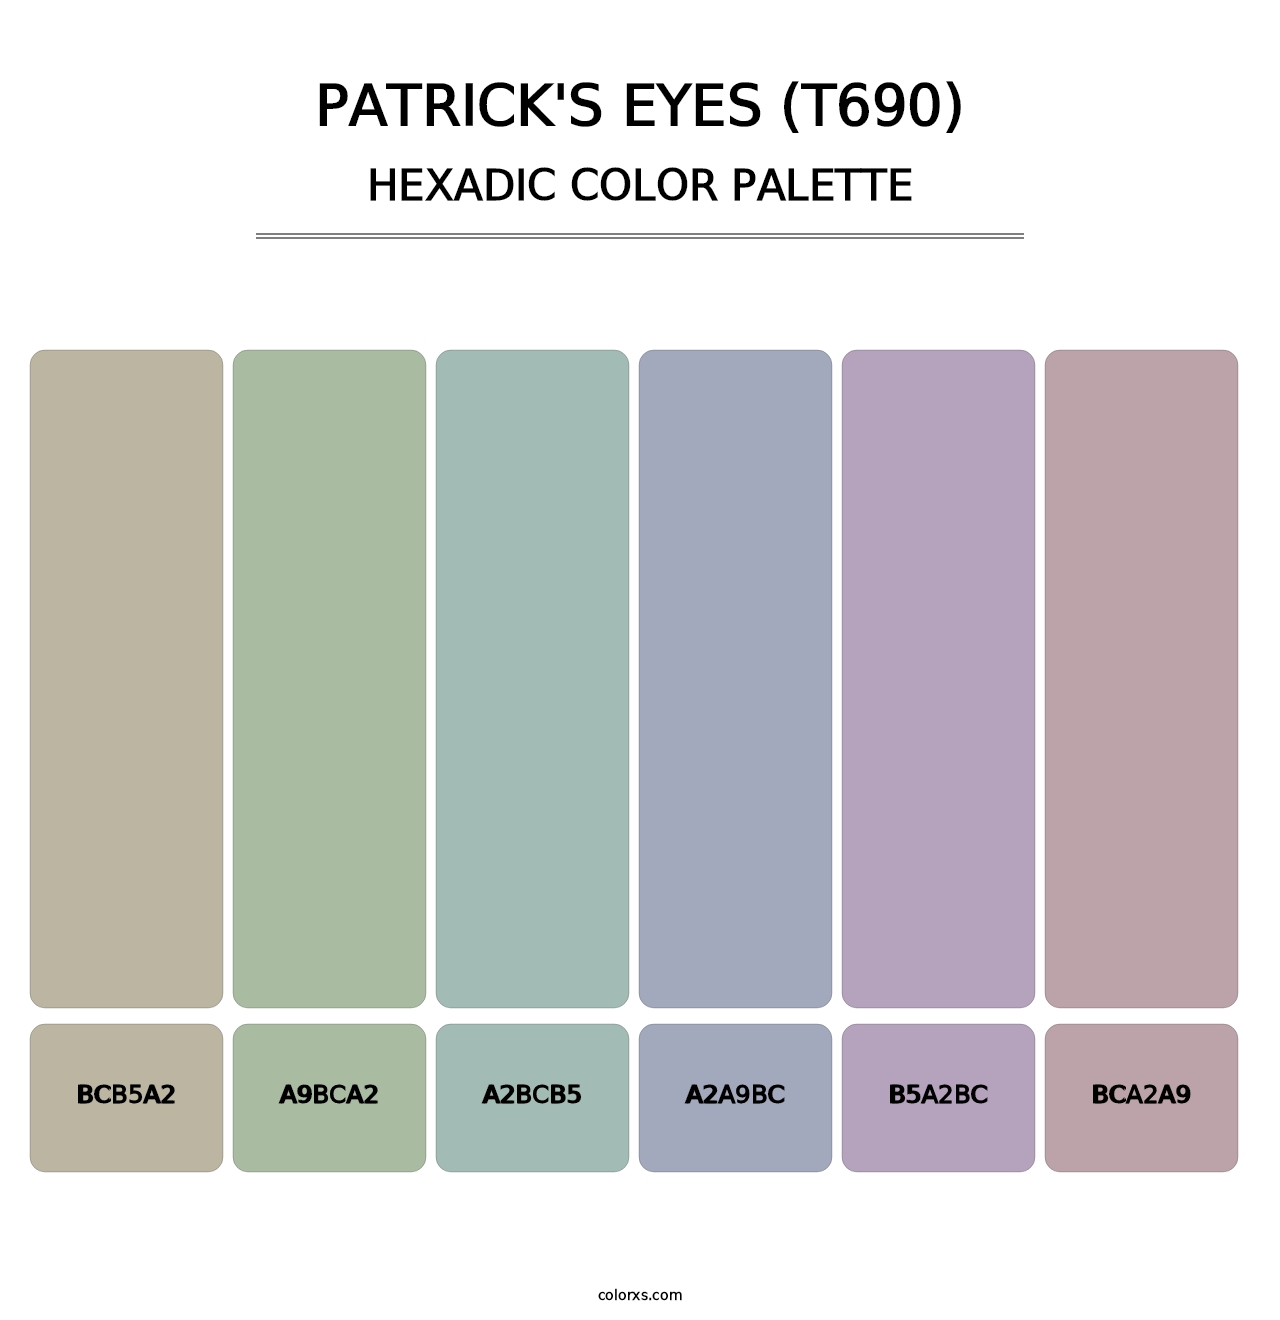 Patrick's Eyes (T690) - Hexadic Color Palette